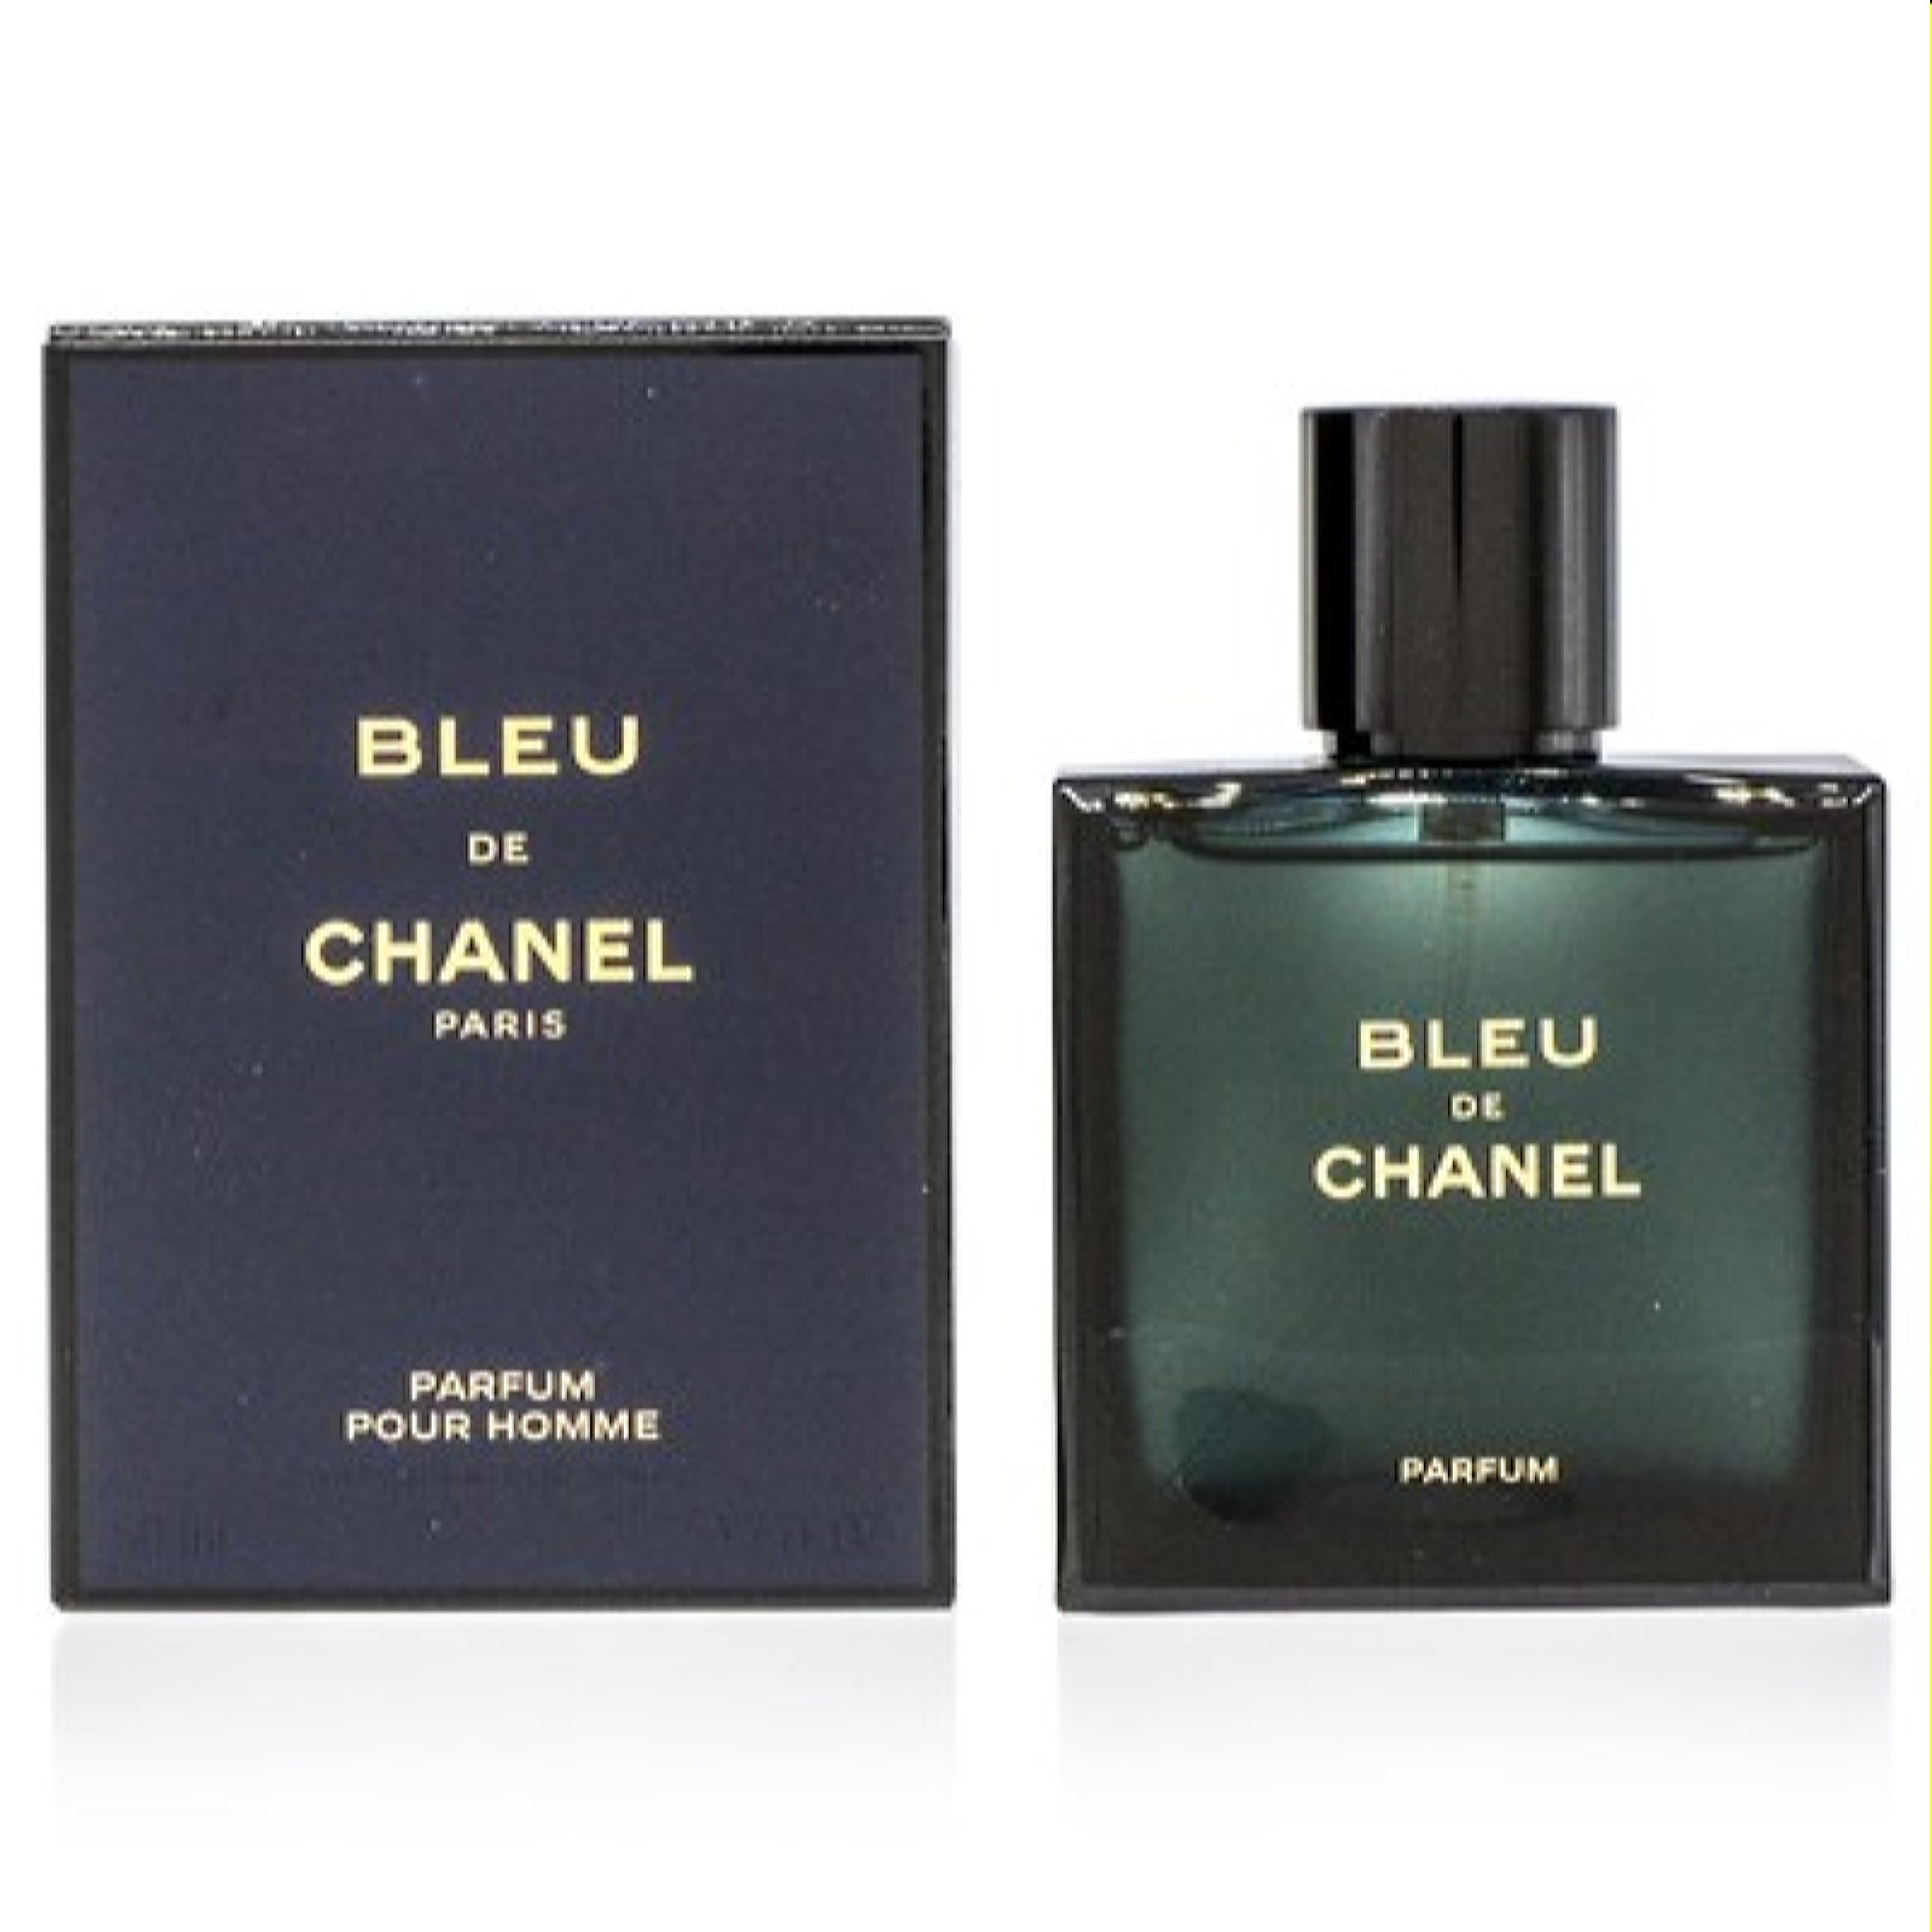 Chanel Bleu de Chanel Eau de Toilette Refillable Travel Spray